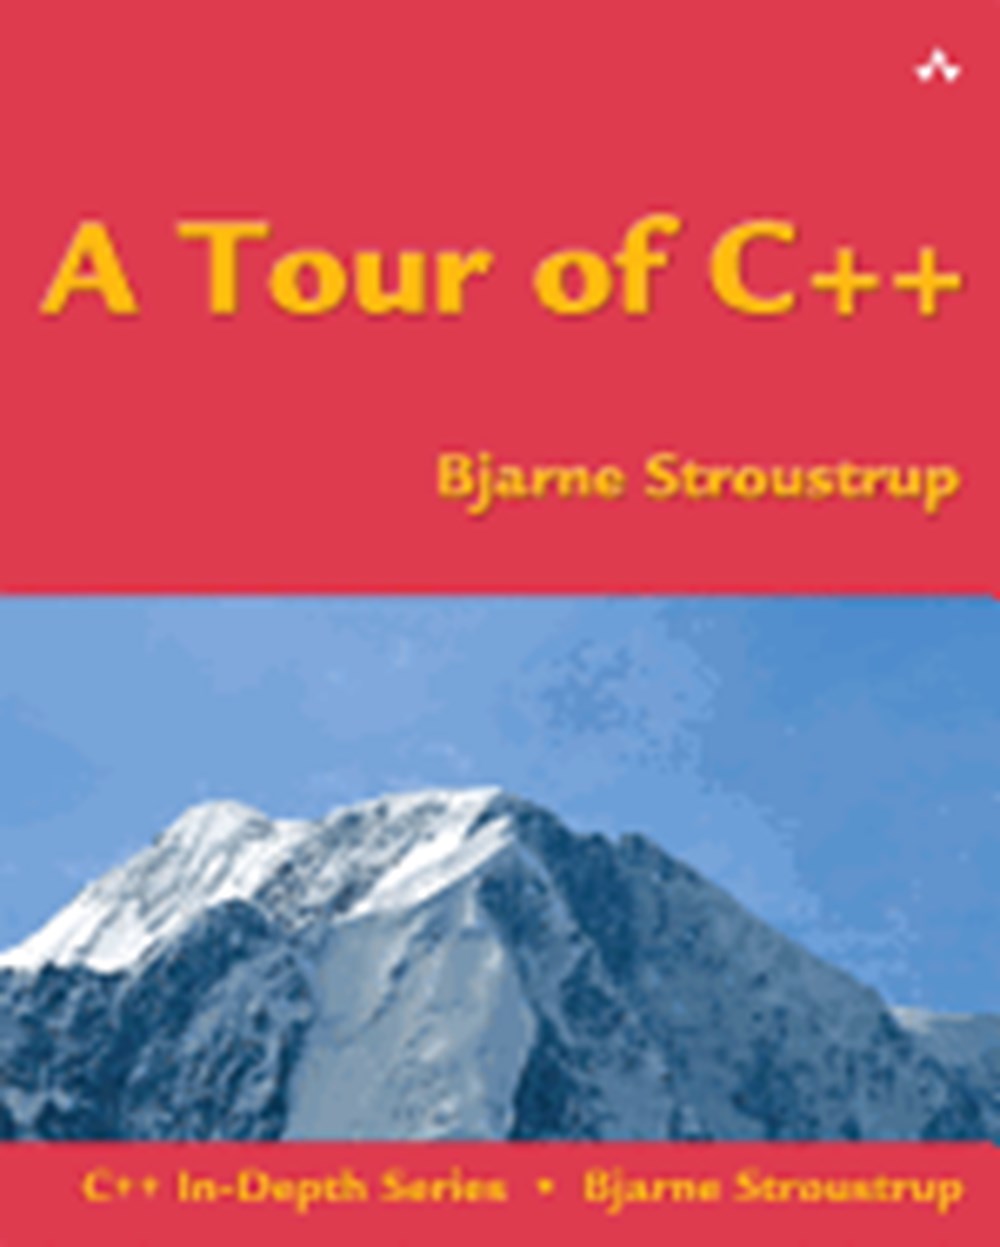 Tour of C++